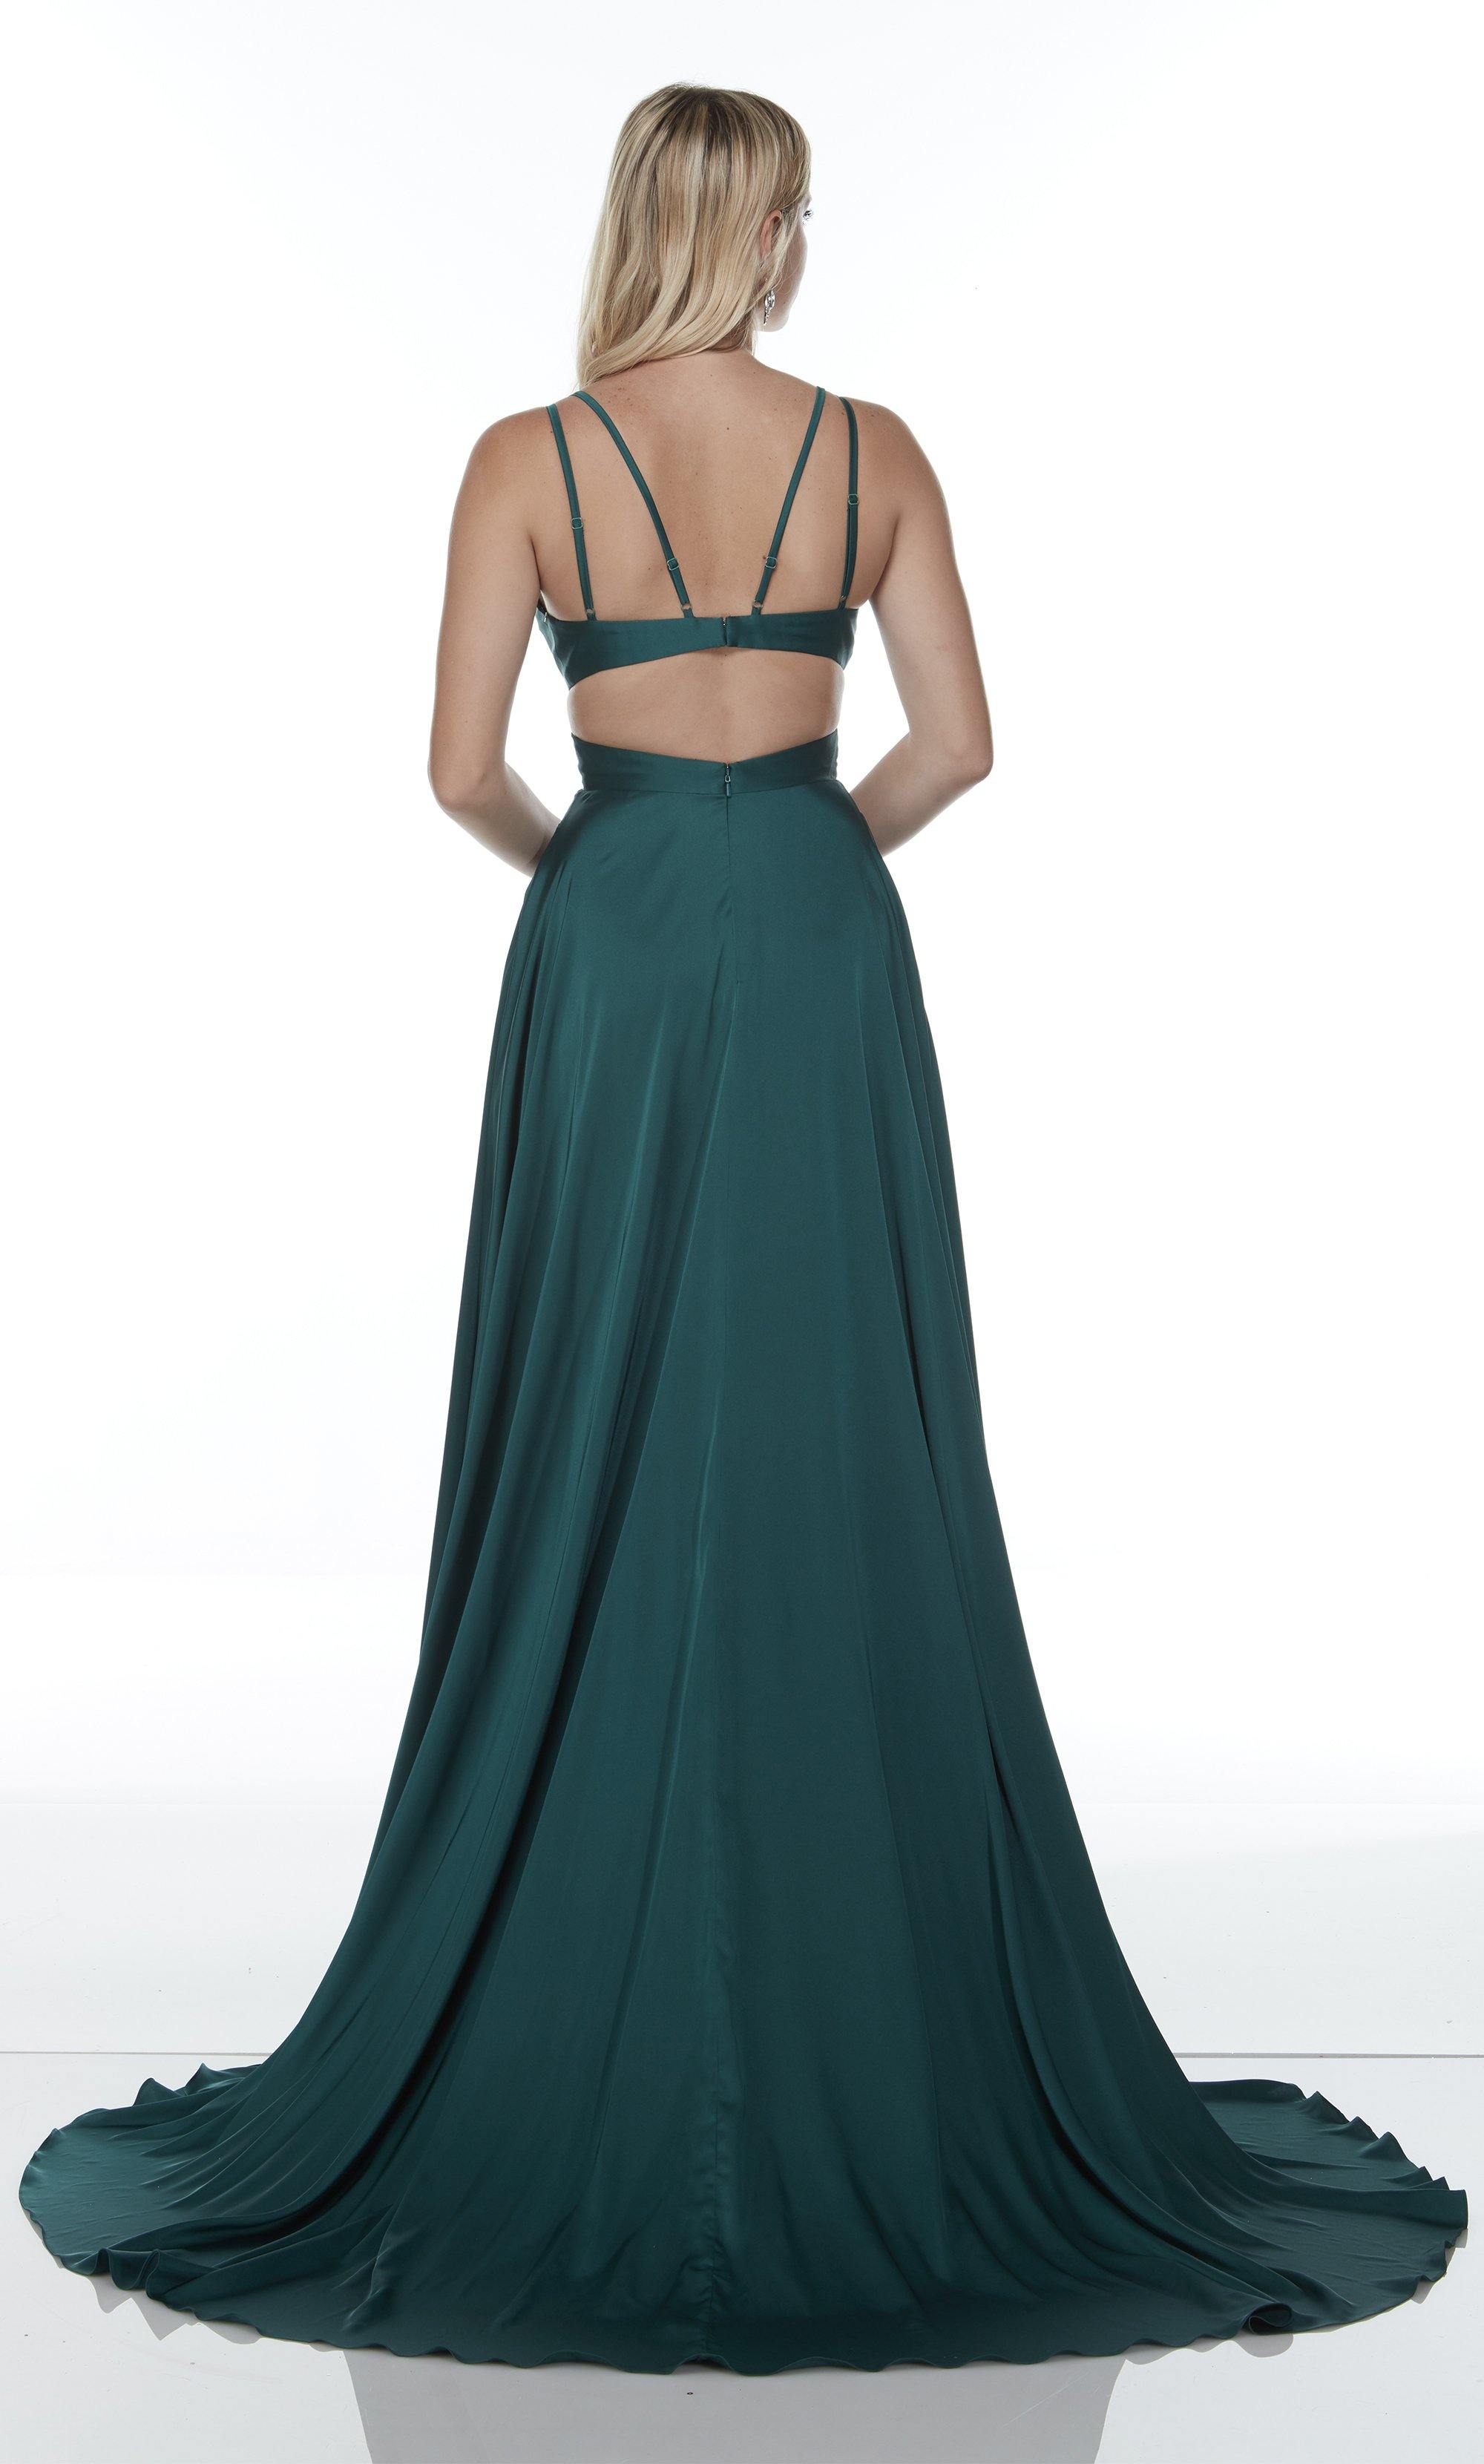 Women's Green Formal Dresses & Evening Gowns | Nordstrom